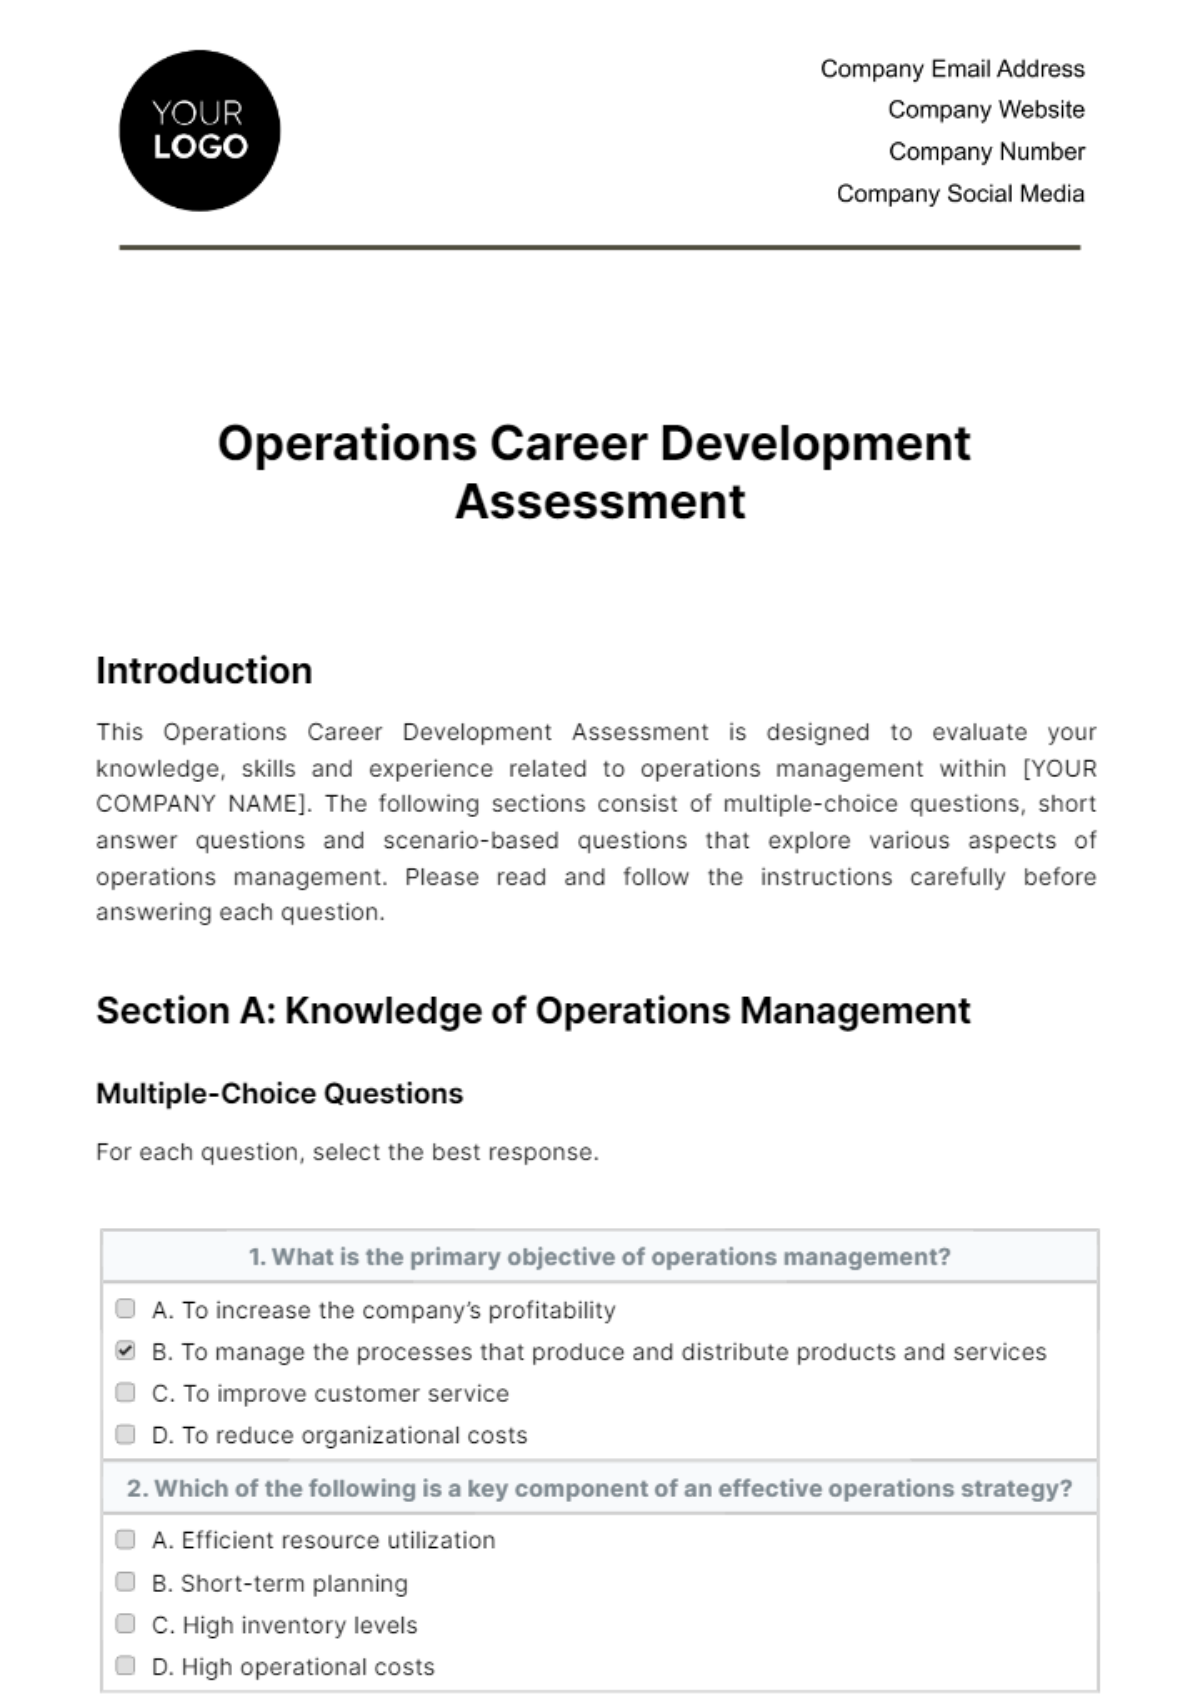 Free Operations Career Development Assessment Template